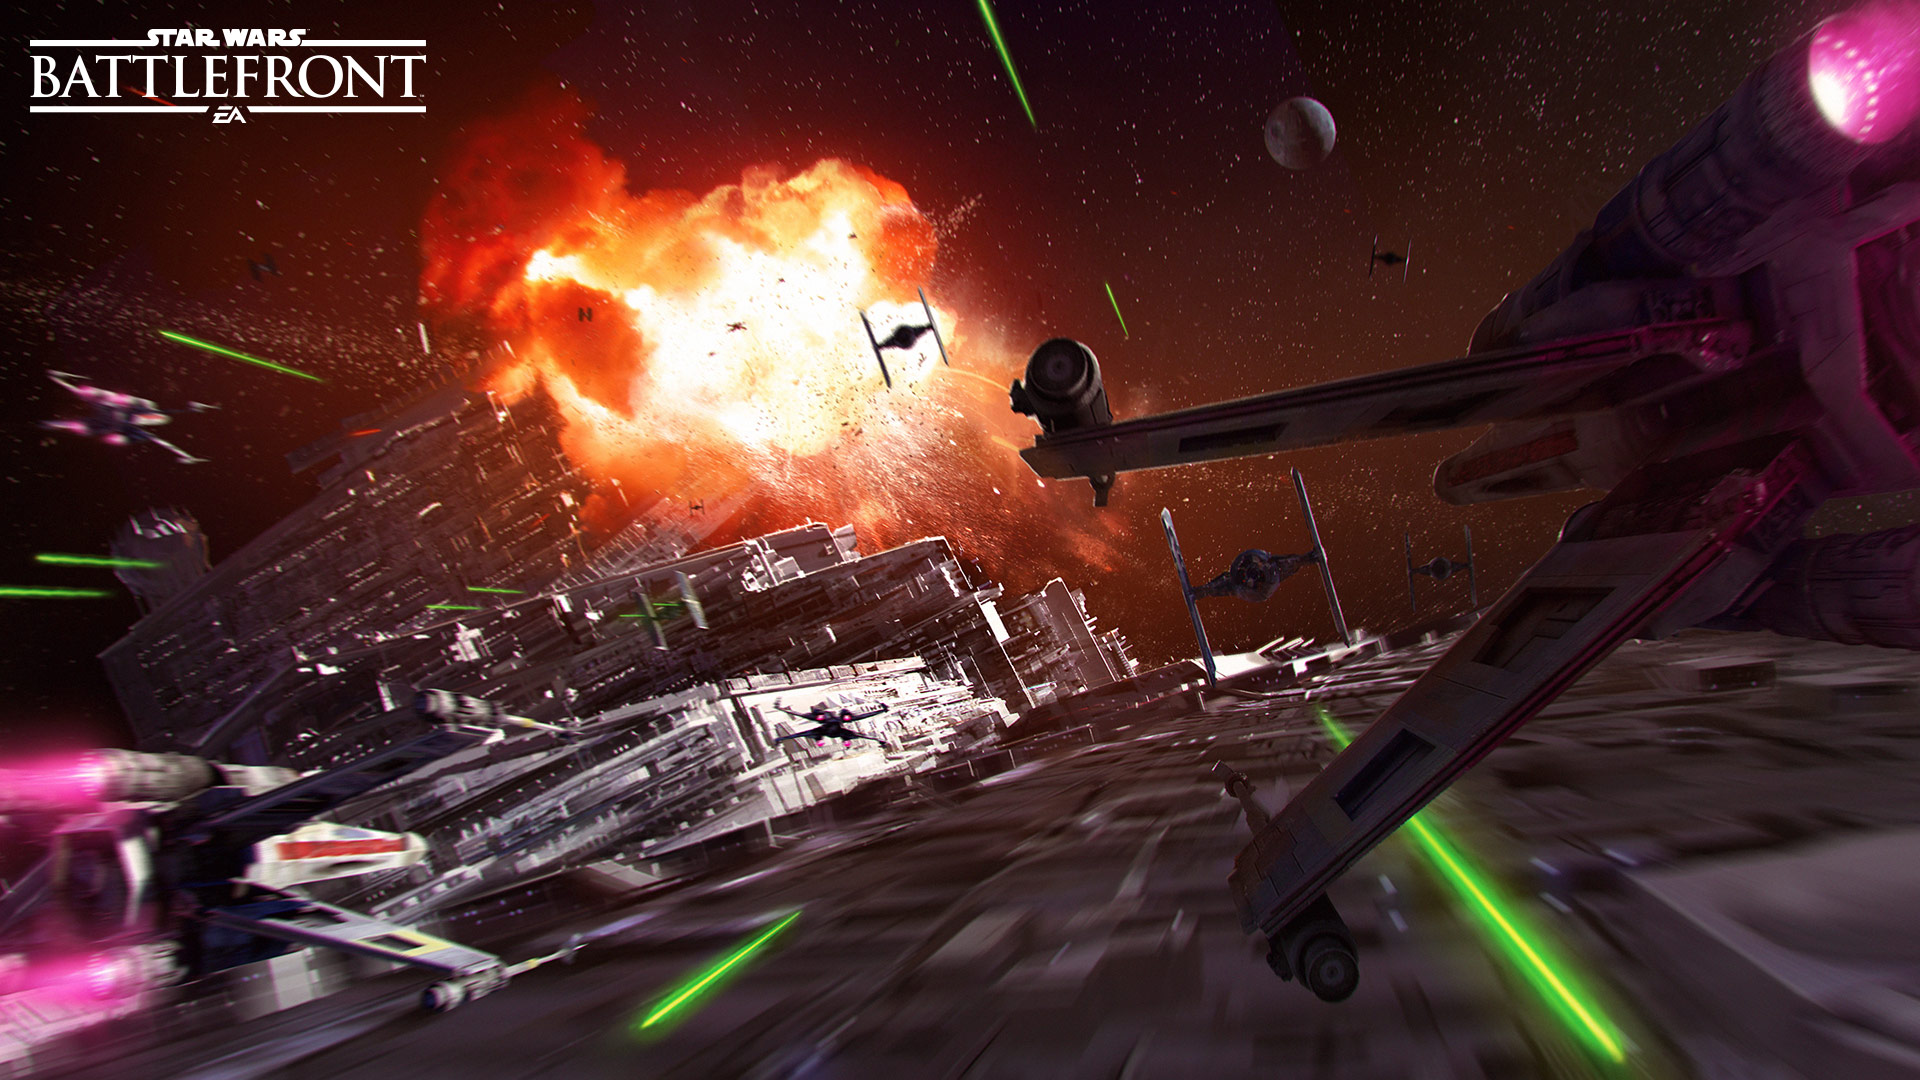 Star Wars Battlefront Backgrounds Pictures Images